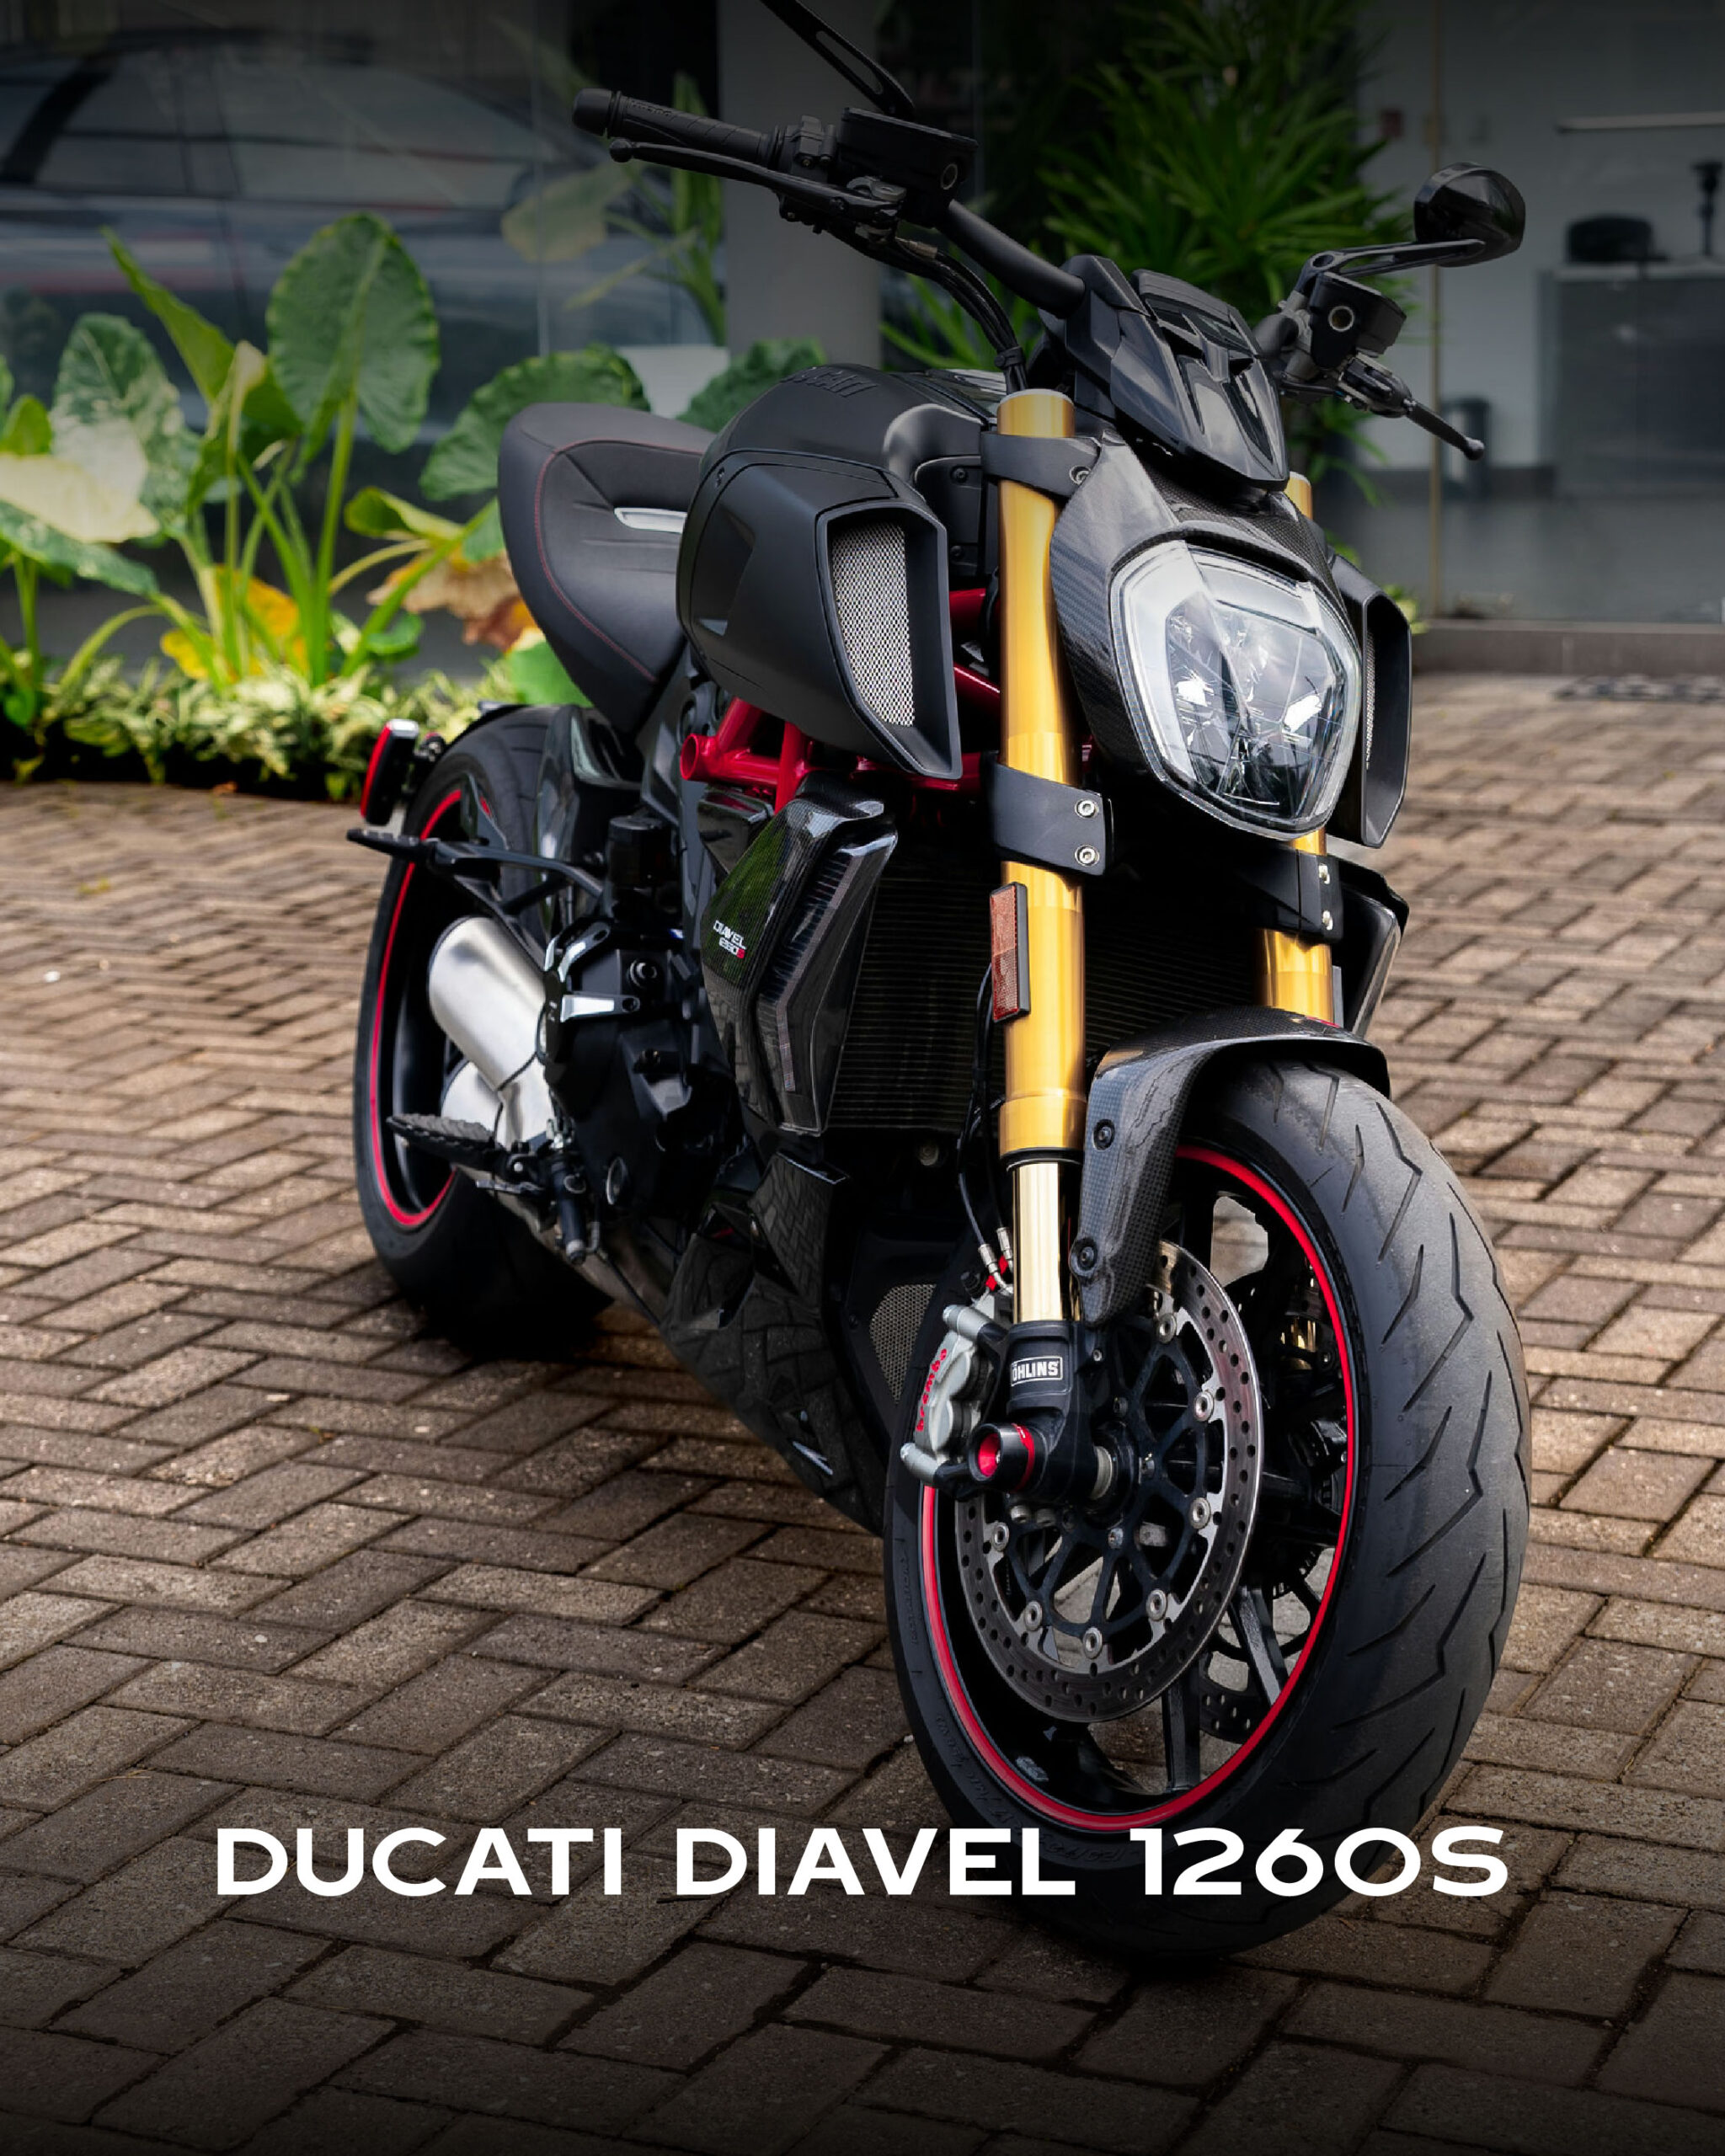 Ducati Diavel 1260s